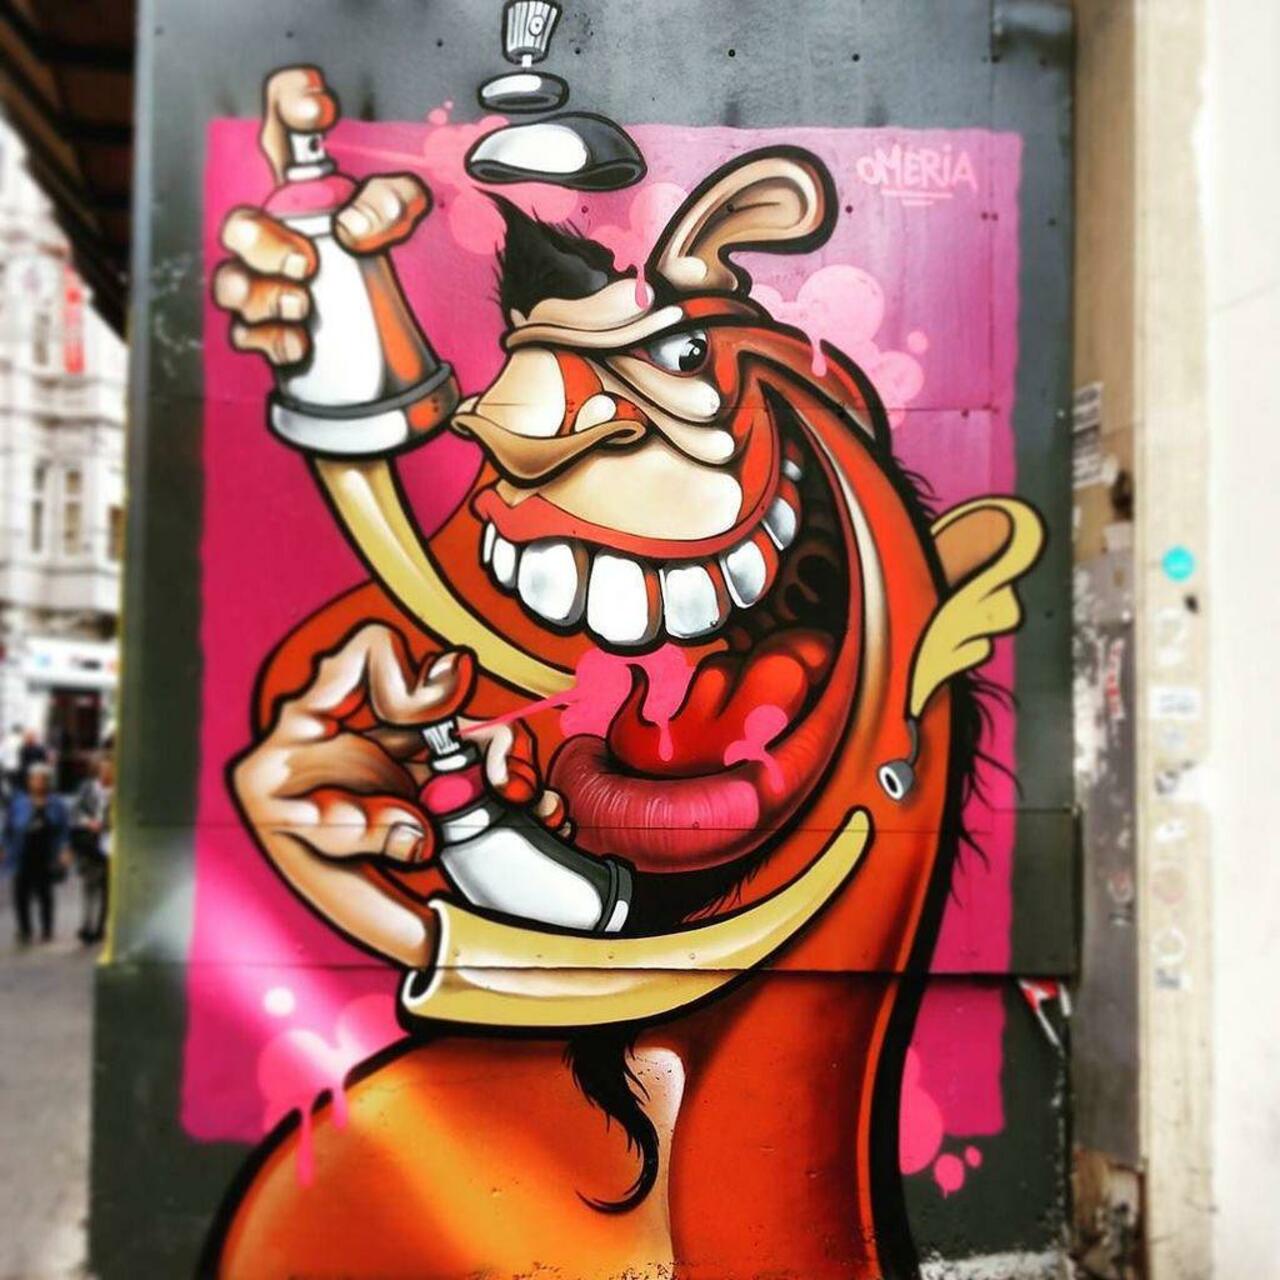 By @omeria @dsb_graff #dsb_graff @rsa_graffiti @streetawesome #streetart #urbanart #graffitiart #graffiti #streetar… http://t.co/HwMXWSMie6